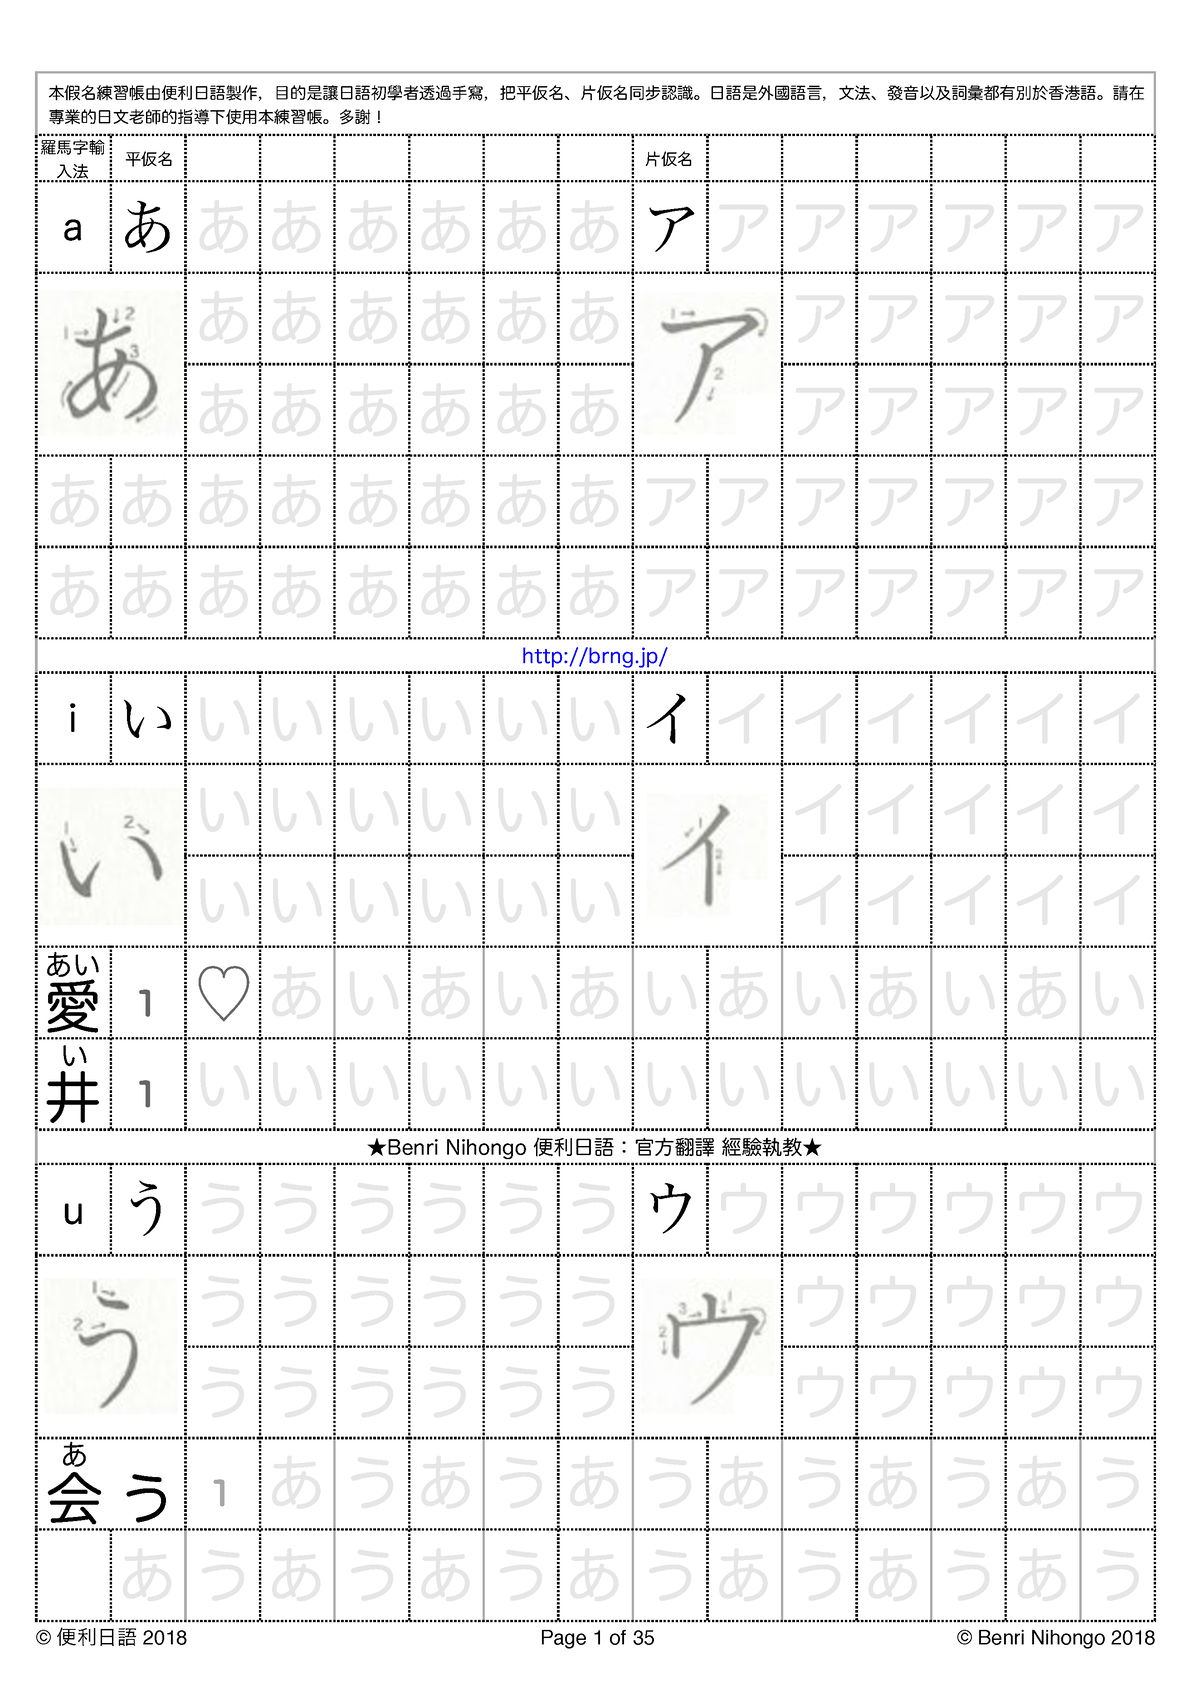 Practica Hiragana Y Katakana - Japan Studies - 🏠 ☺ 📢 🍶 ☂ 🐂 🍣 💦 🌏 🆘 ♂ 🐕 ...